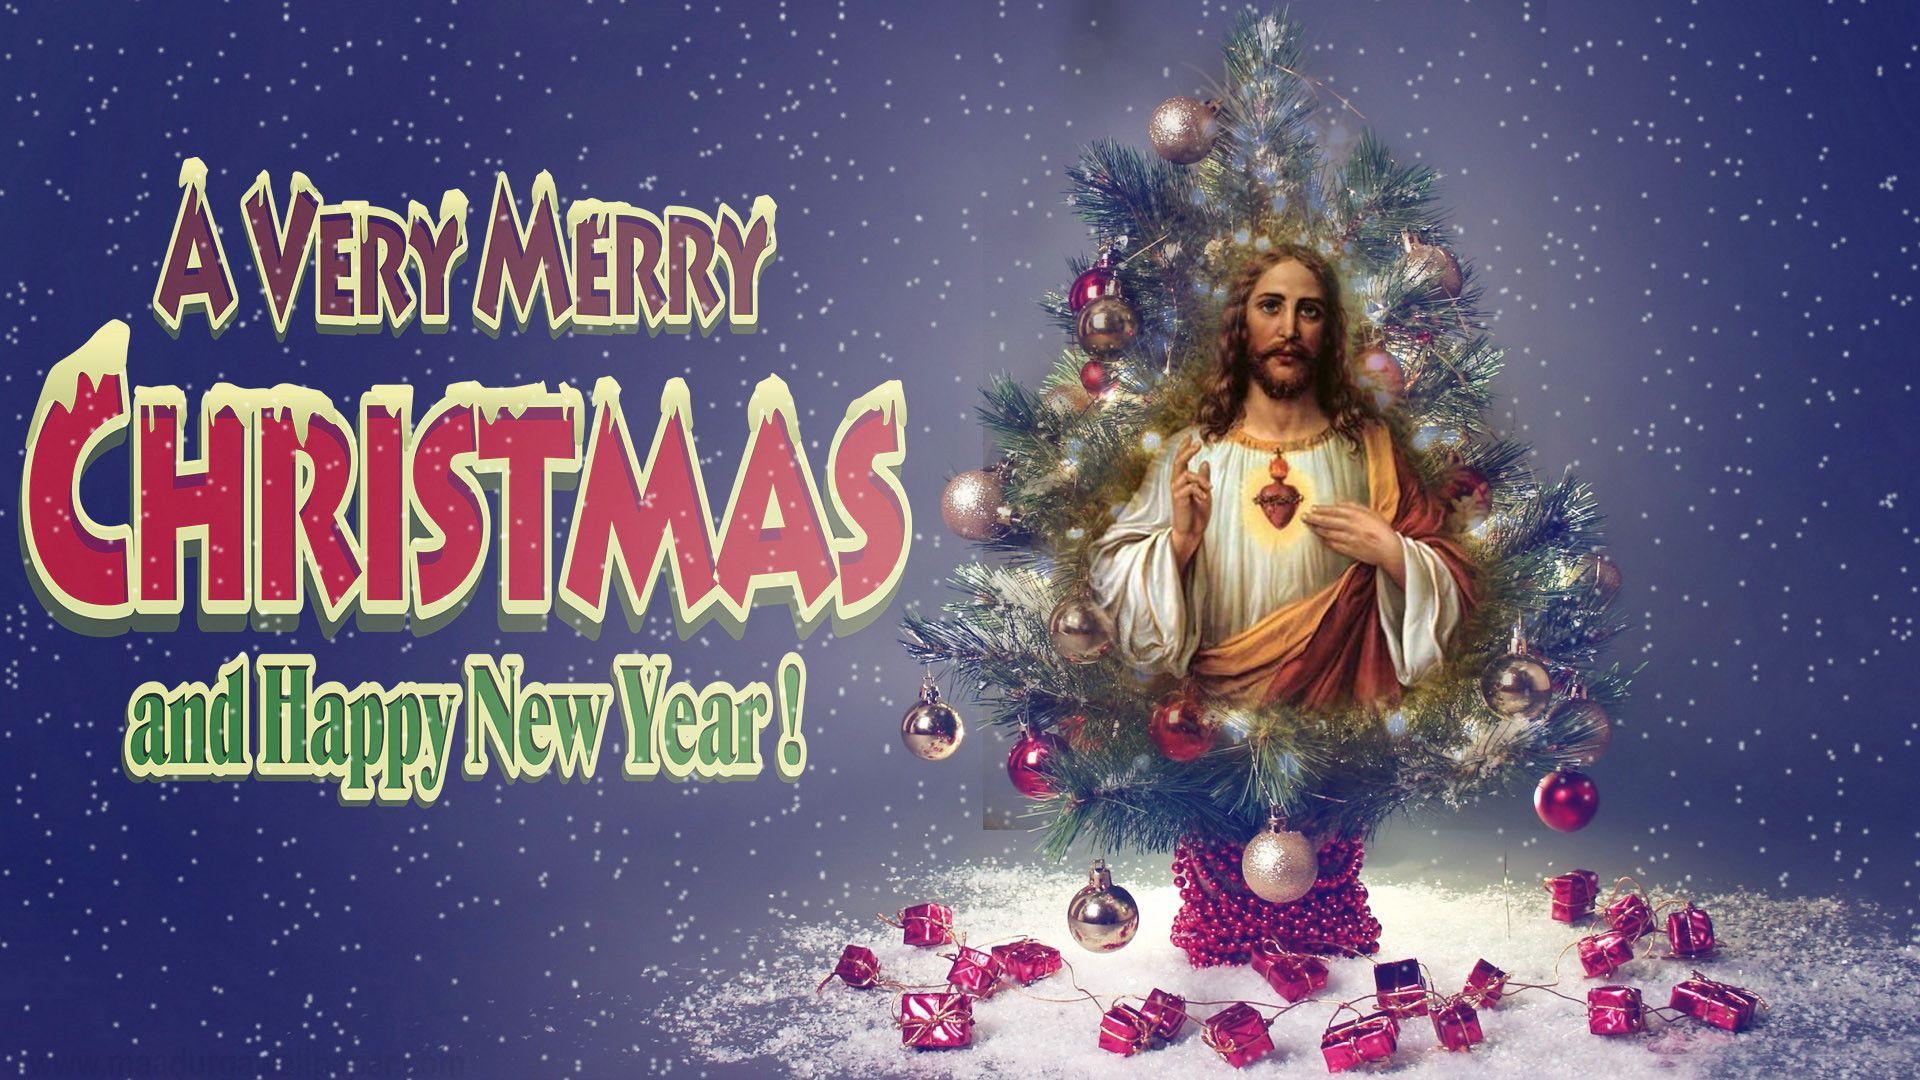 Baby Jesus Christmas wallpaper, beautiful photo & HD image